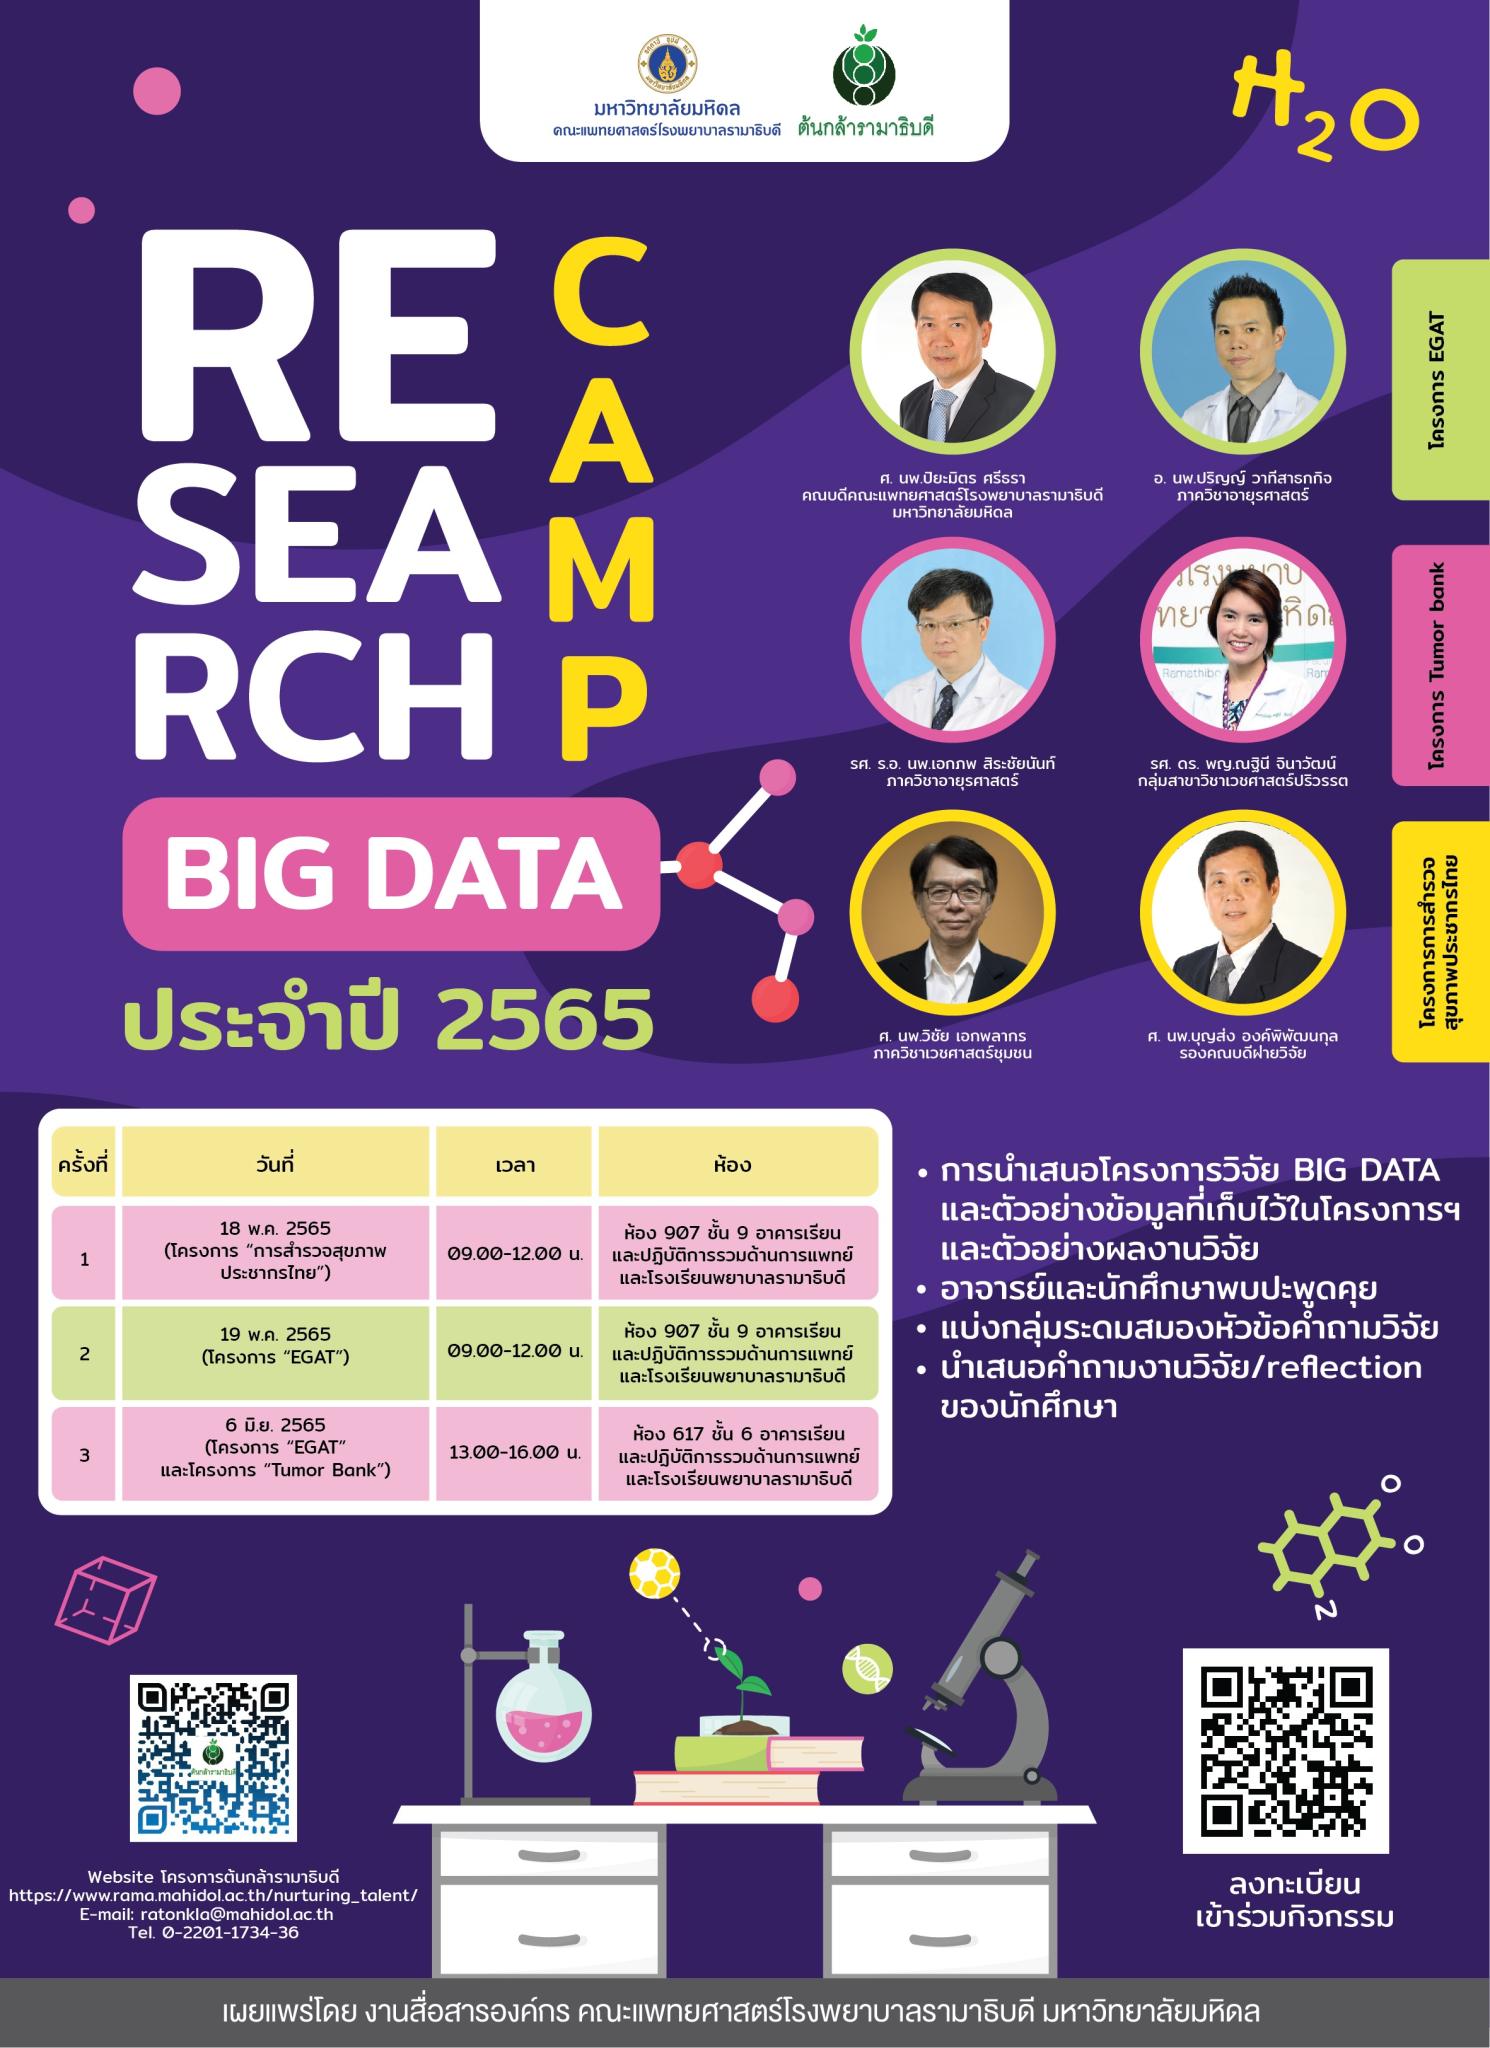 RESEARCH CAMP BIG DATA ประจำปี 2565